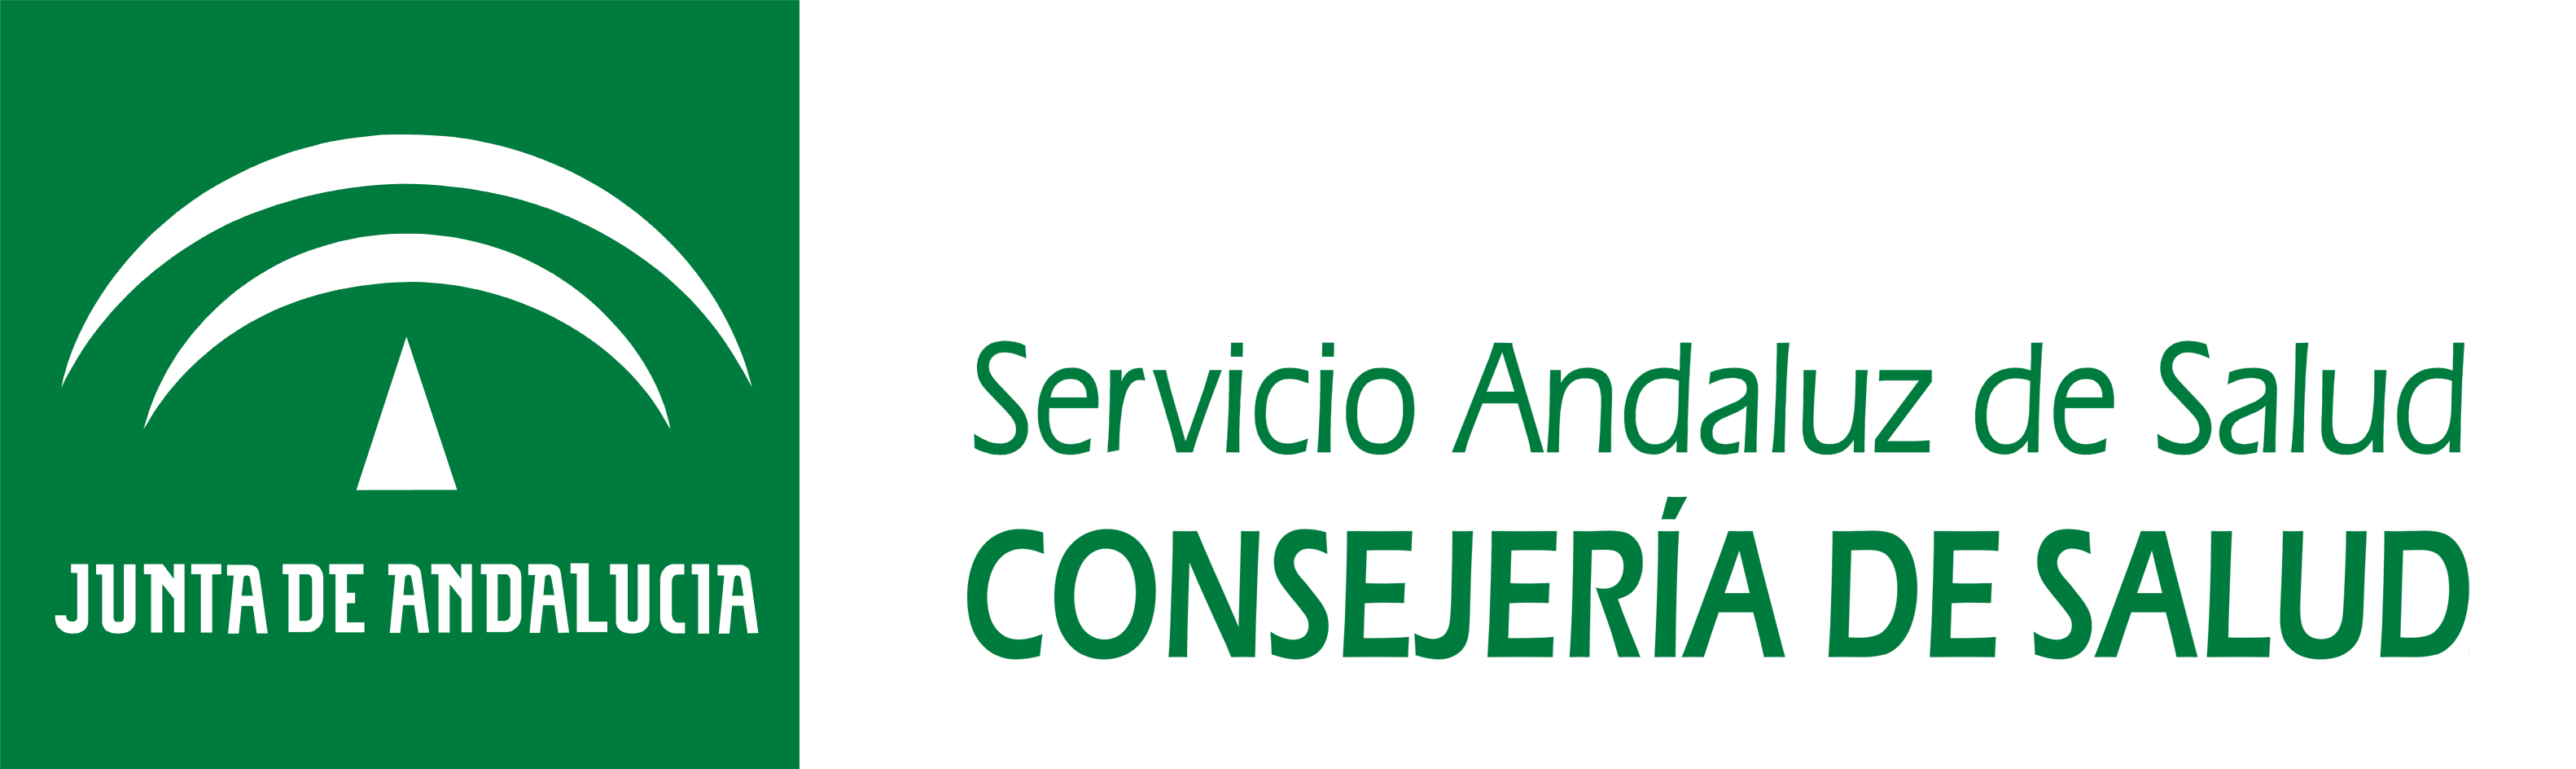 Consejeria de salud Junta de Andalucía